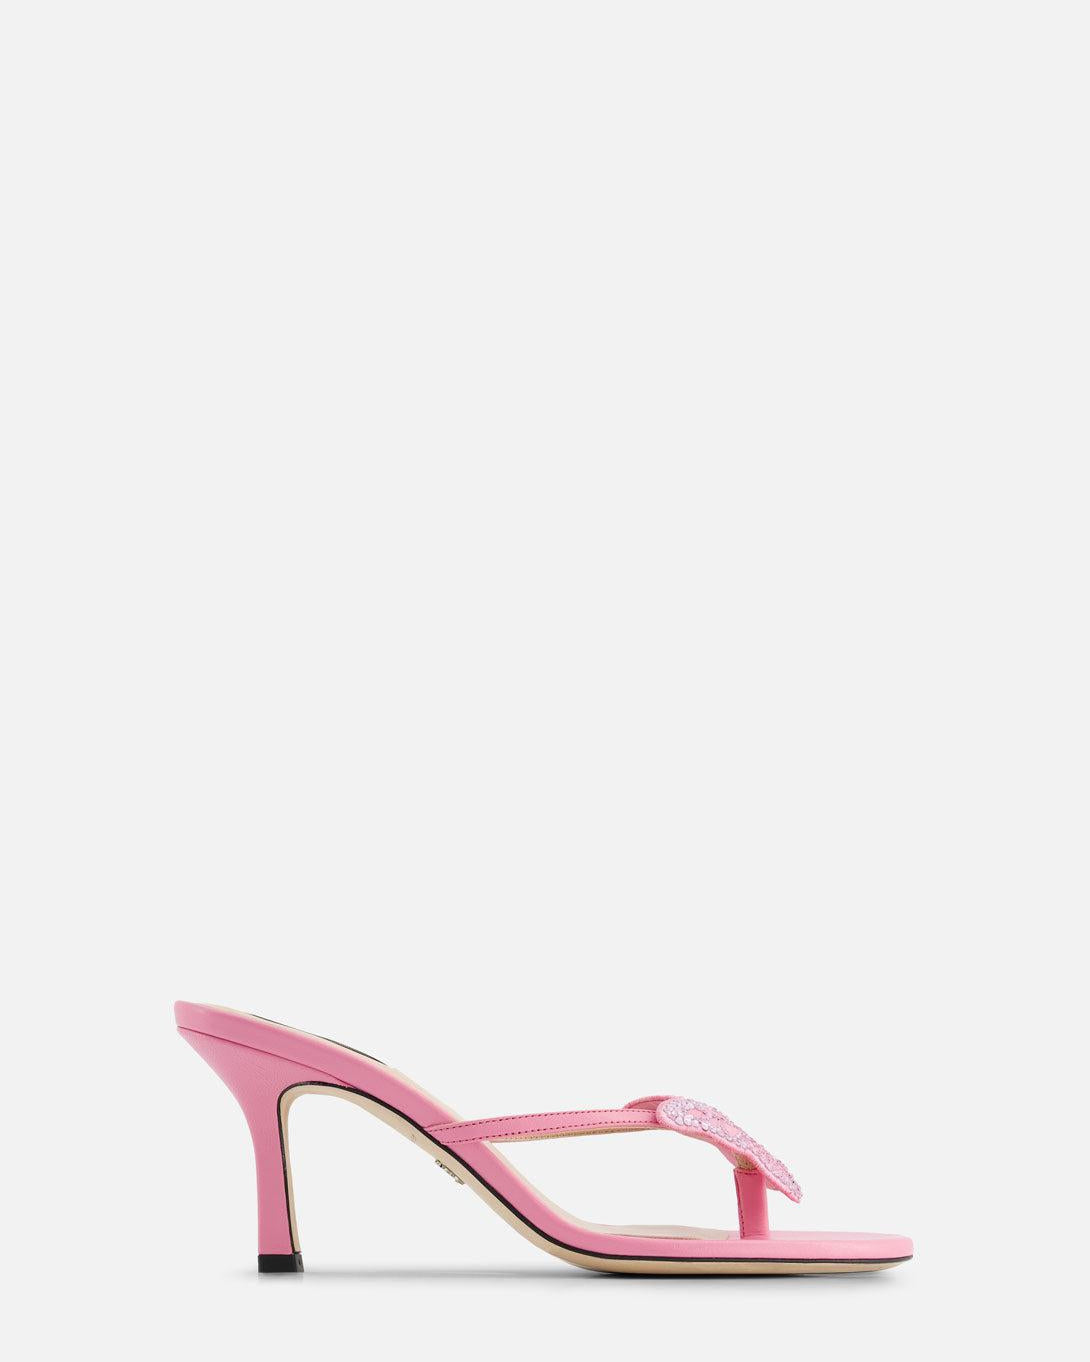 Butterfly Sandals - Pink - Shoes - Blumarine - Elevastor